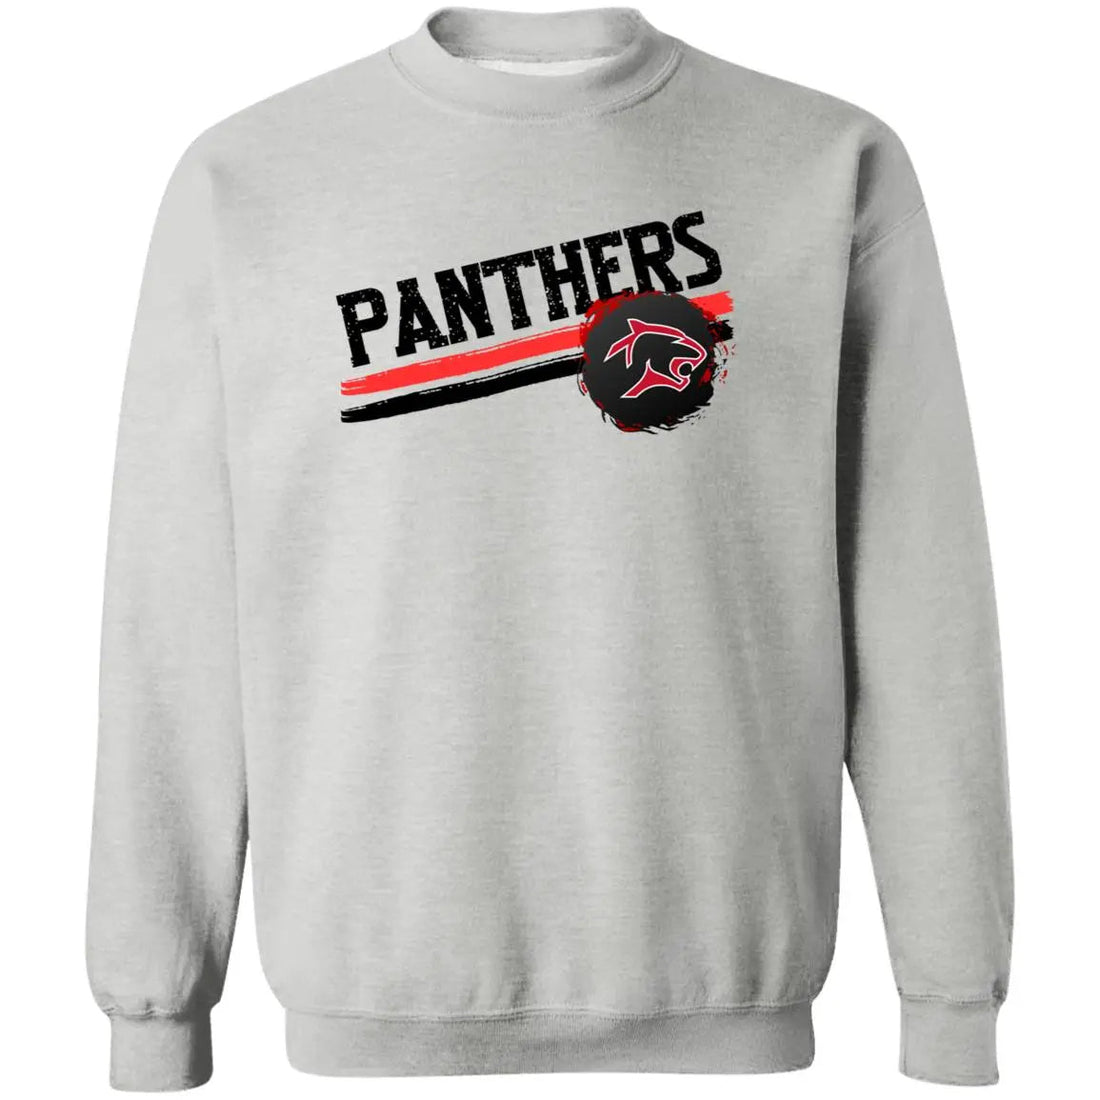 Panthers Bold Crewneck Pullover Sweatshirt - Sweatshirts - Positively Sassy - Panthers Bold Crewneck Pullover Sweatshirt